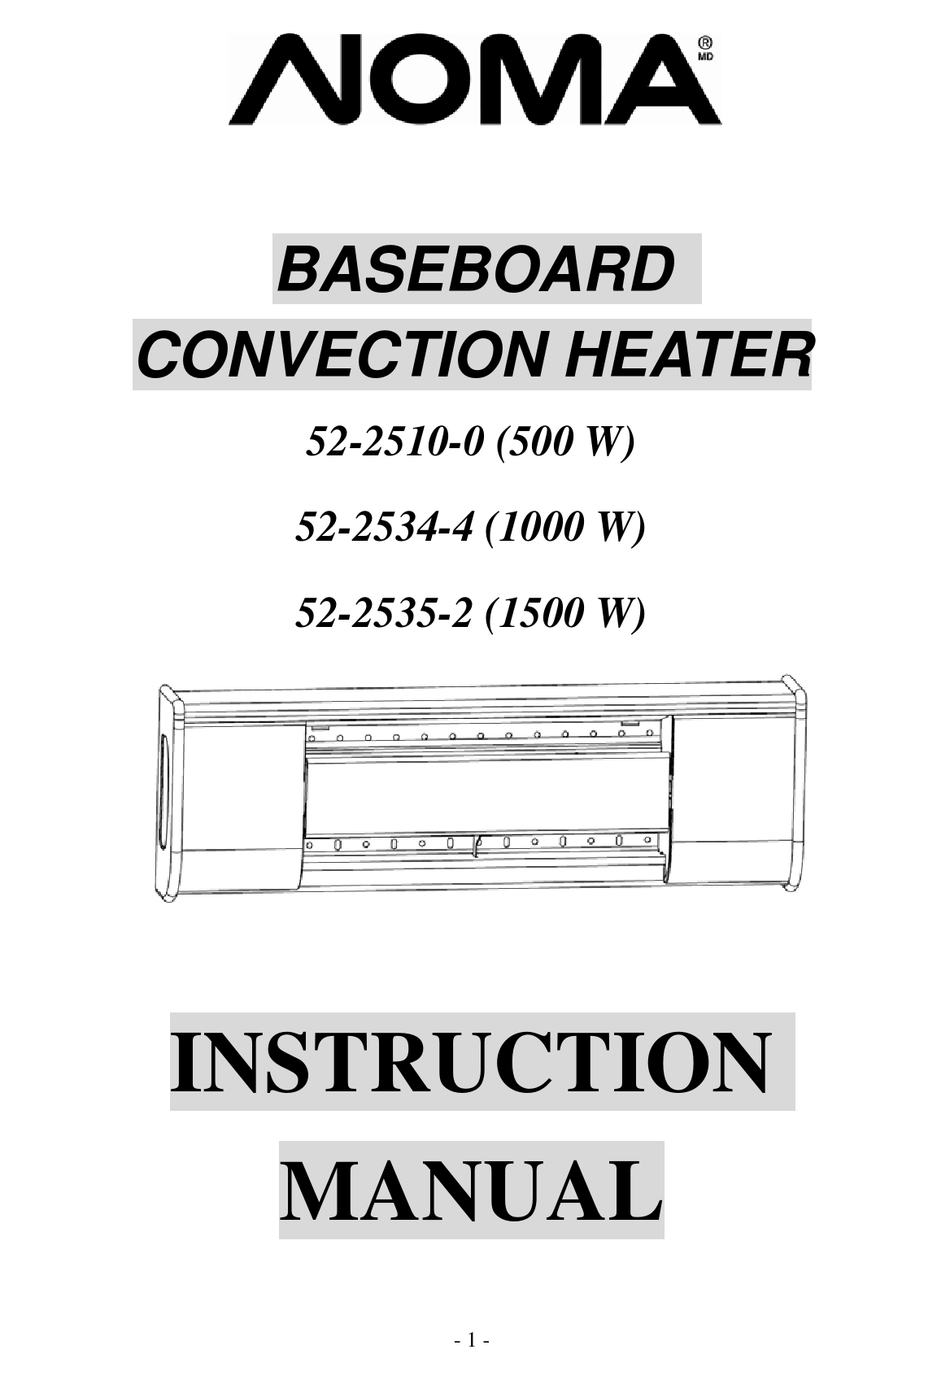 NOMA 52-2510-0 INSTRUCTION MANUAL Pdf Download | ManualsLib  Noma Convection Heater Wiring Diagram    ManualsLib